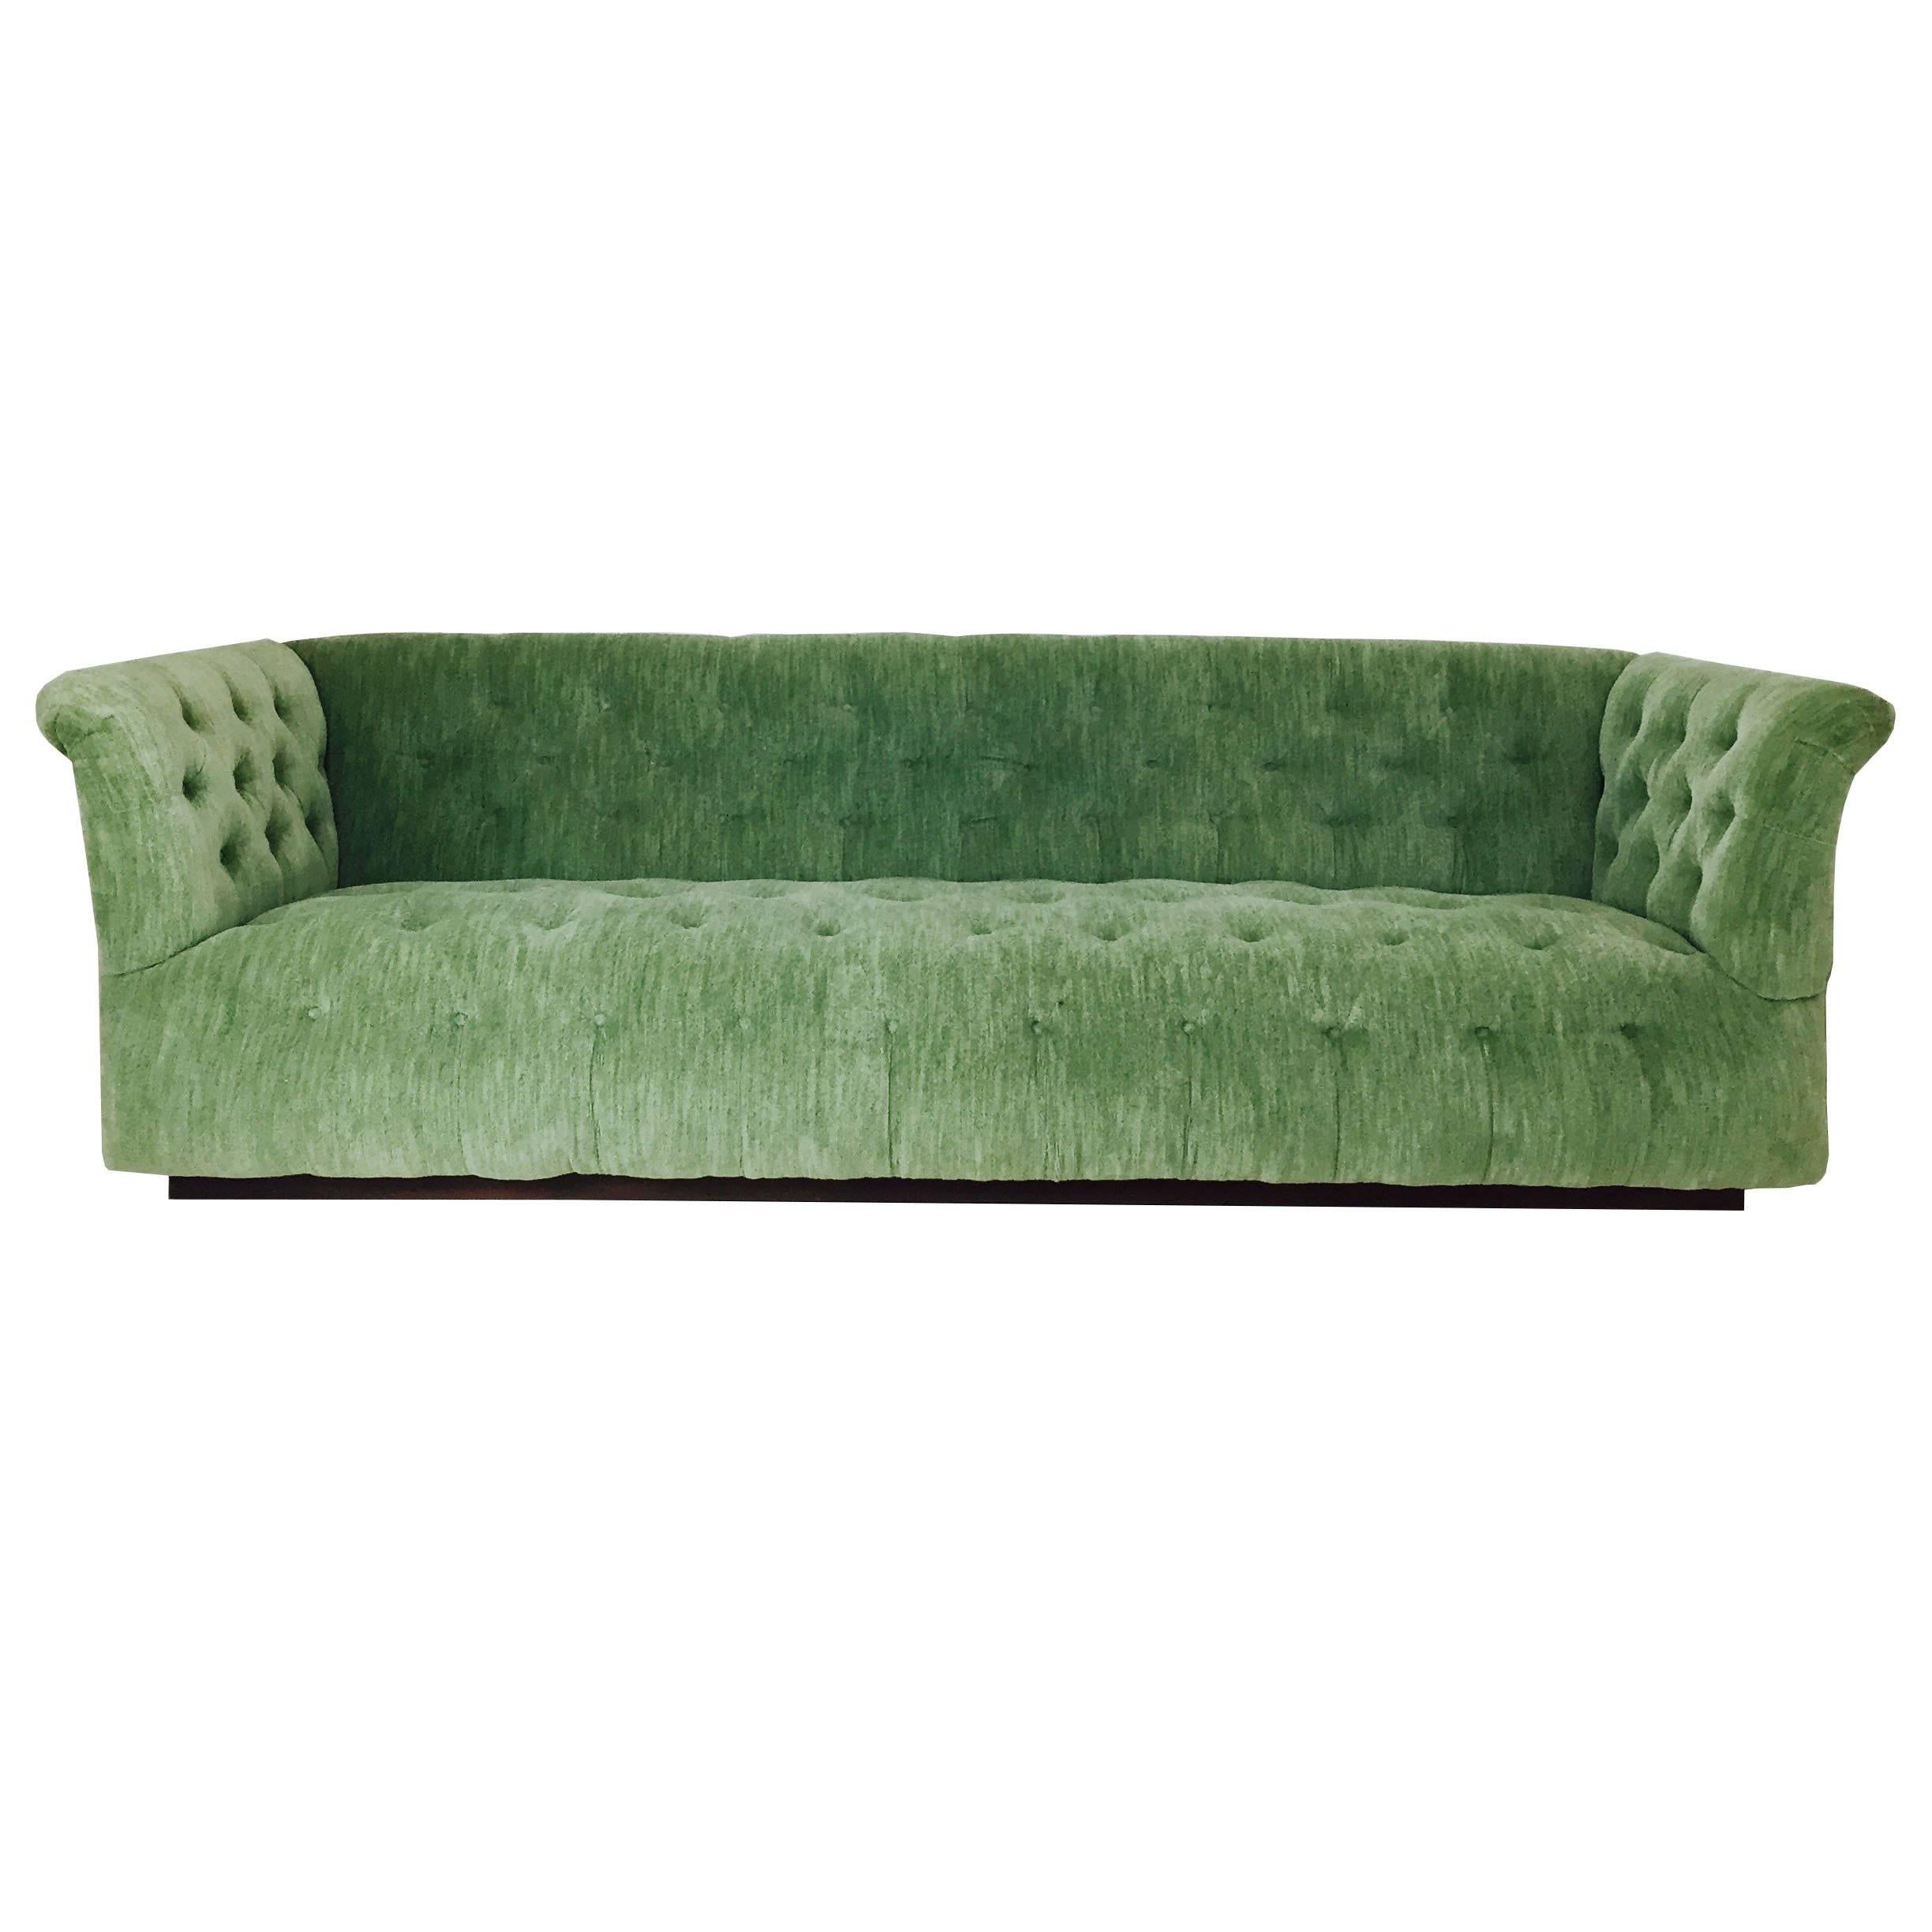 Milo Baughman Chesterfield Style Tufted Sofa